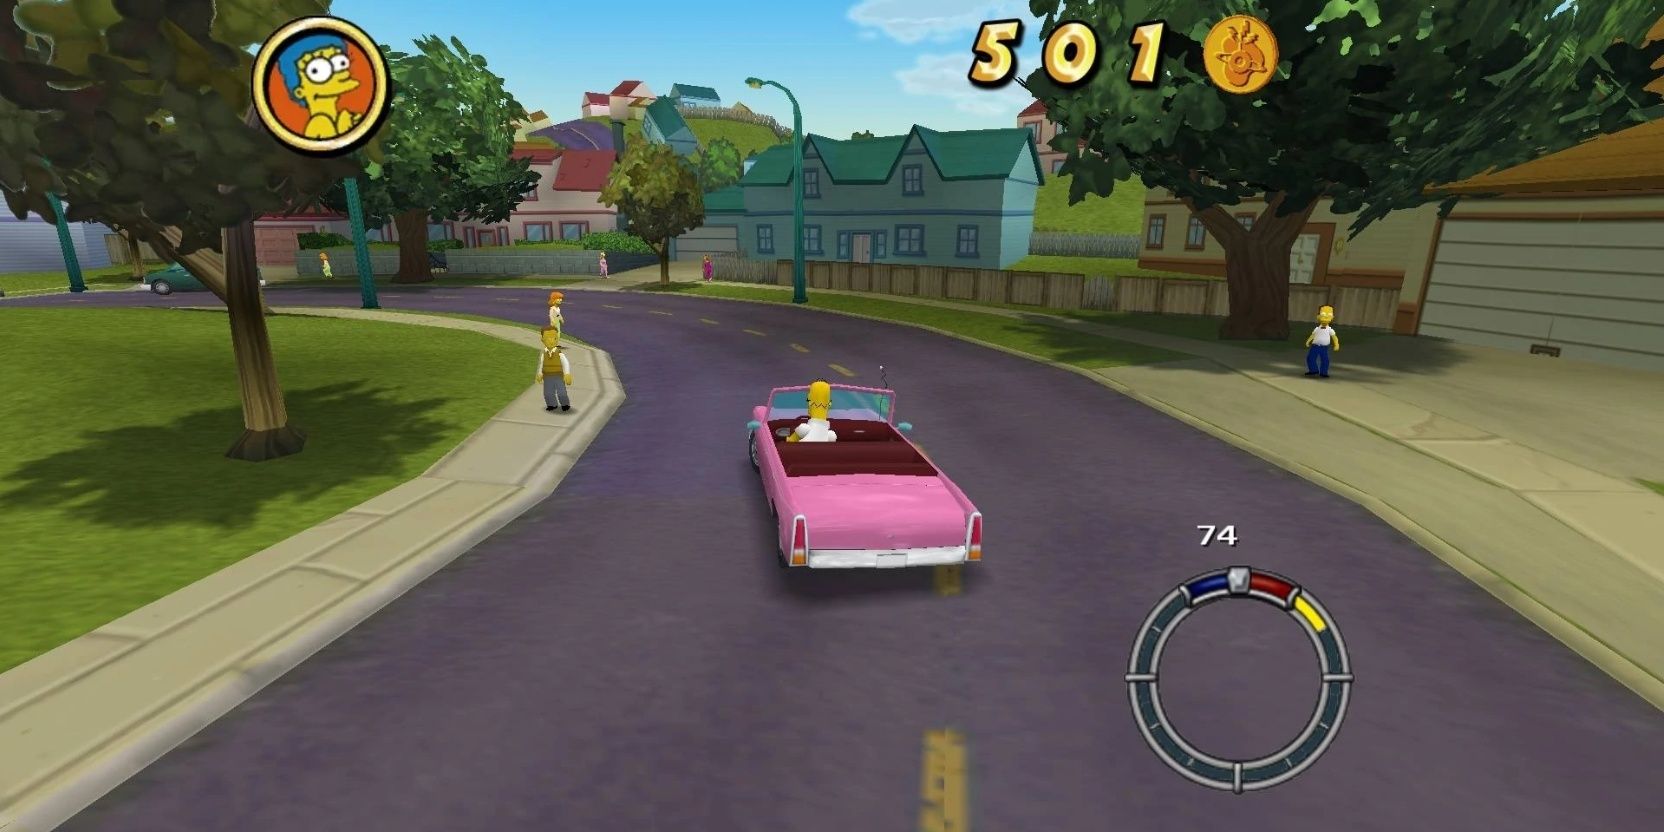 A screenshot of The Simpsons Hit & Run where Homer is driving through a neighborhood